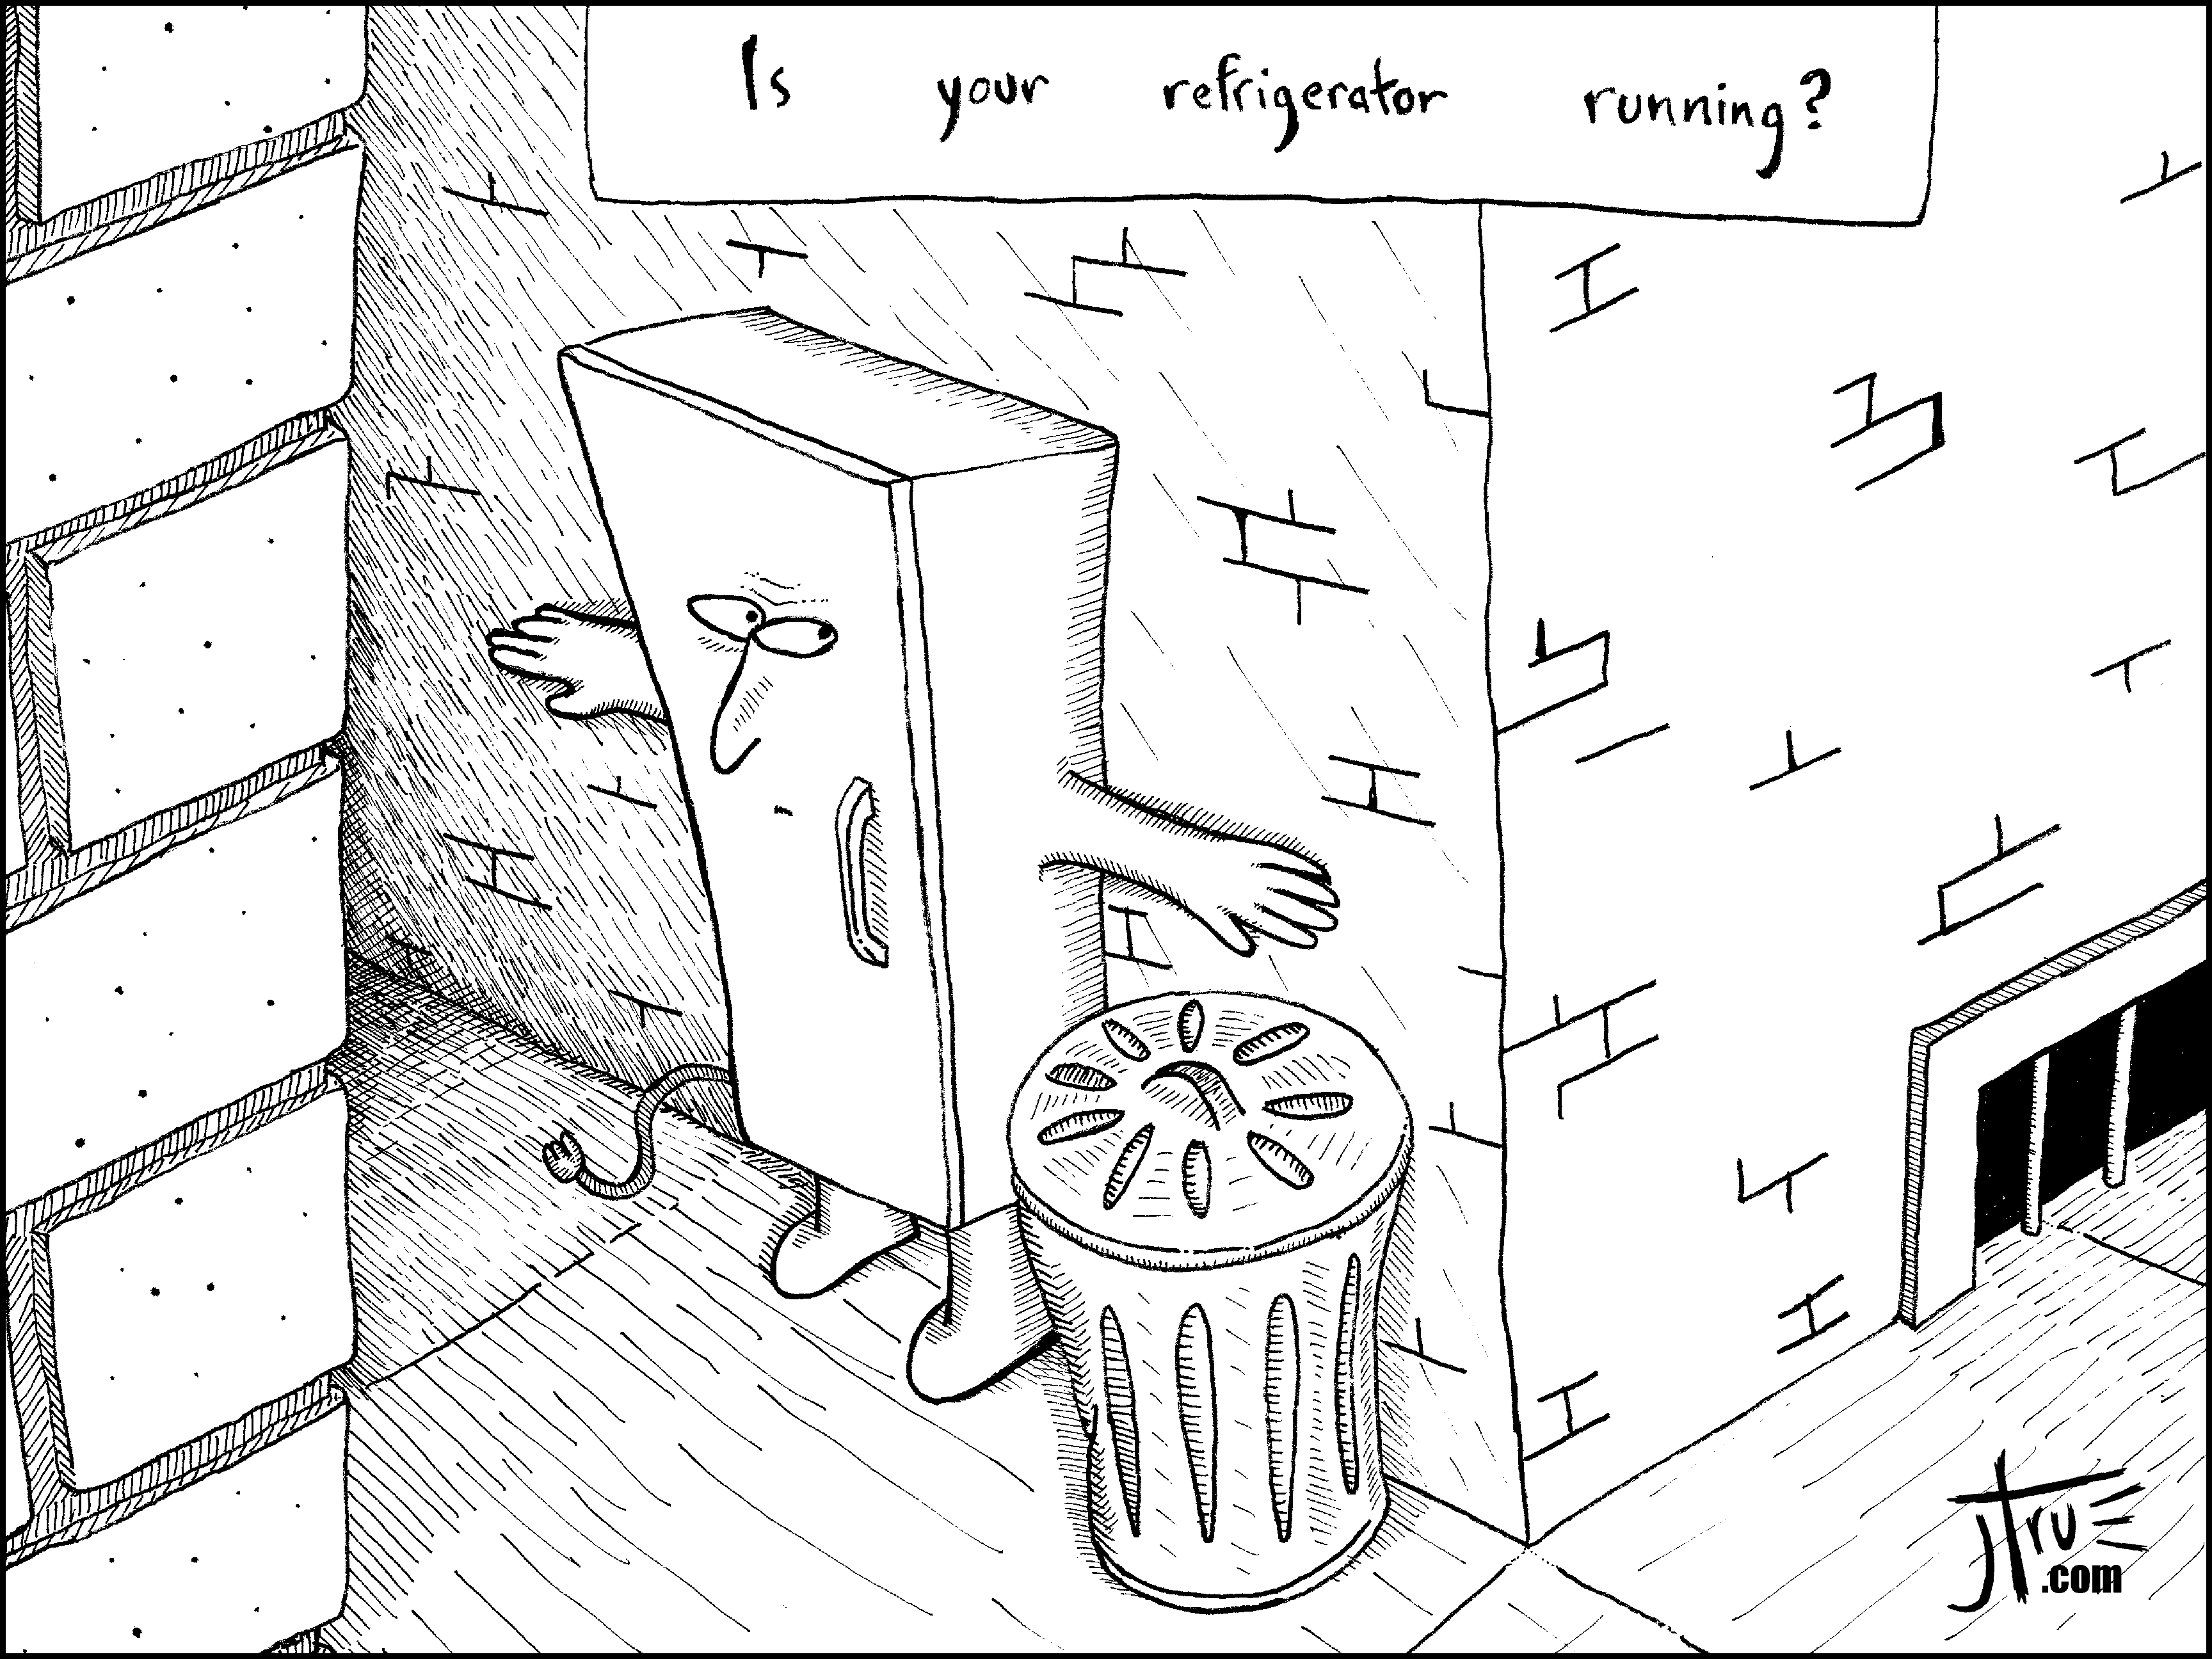 running fridge